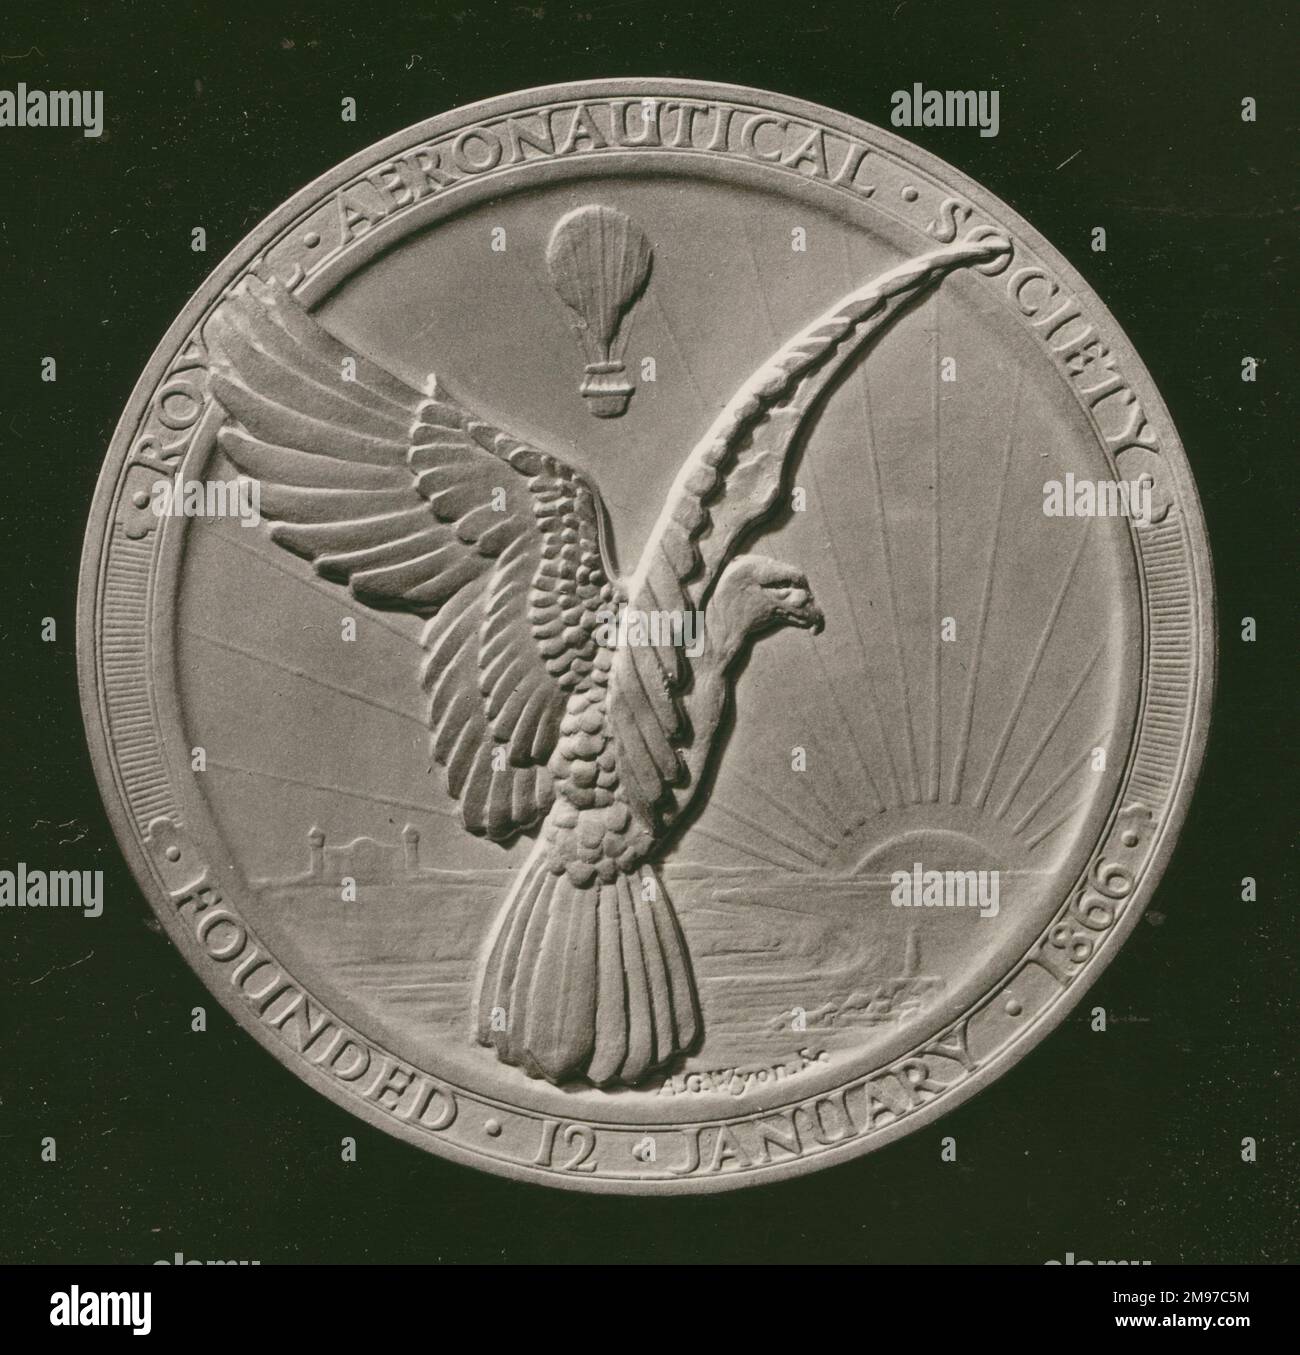 British Silver Medal for Aeronautics, obverse, 1933. Stock Photo